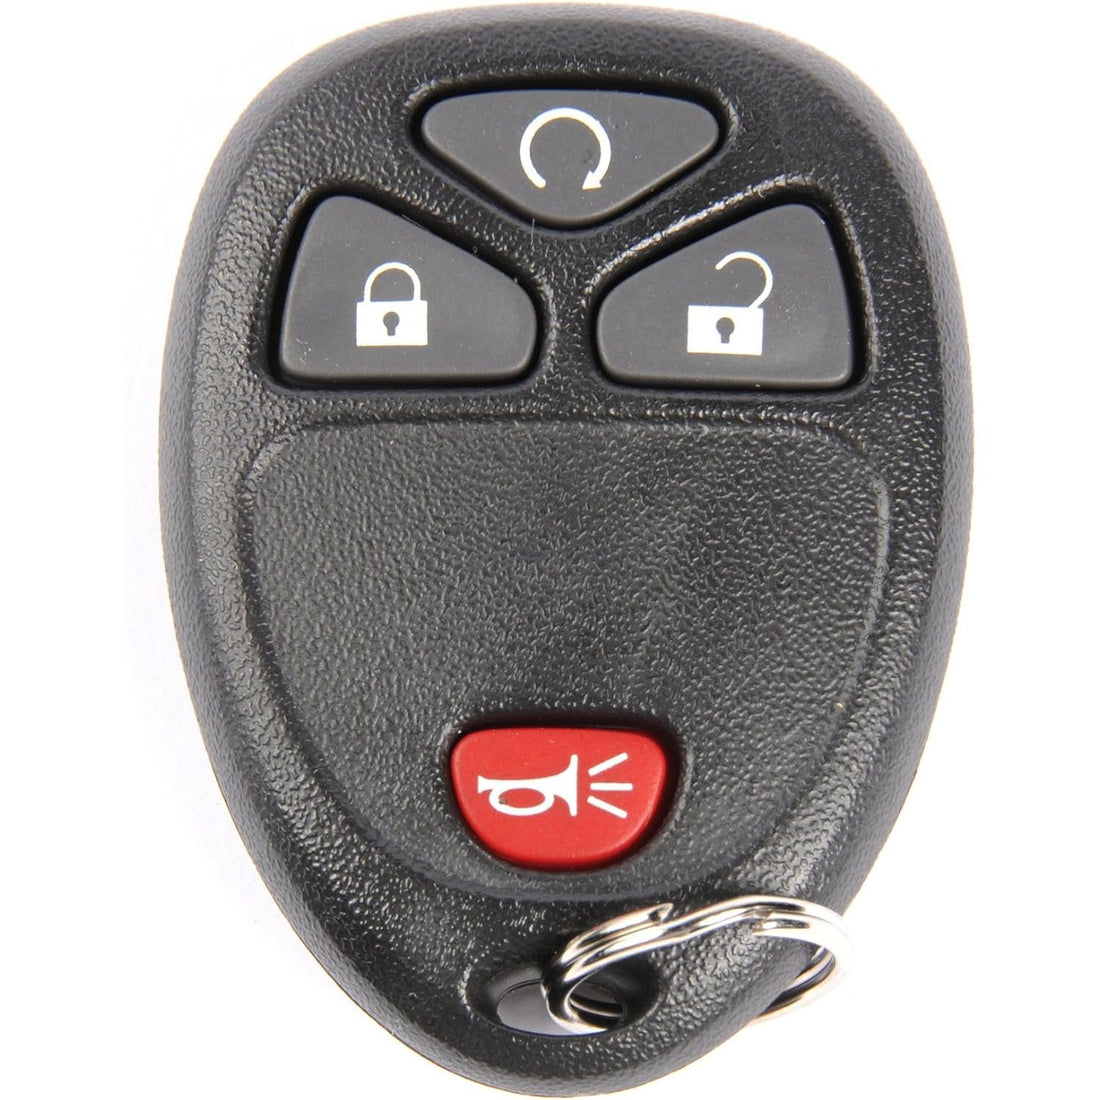 GM Genuine Parts 15114374 4 Button Keyless Entry Remote Key Fob